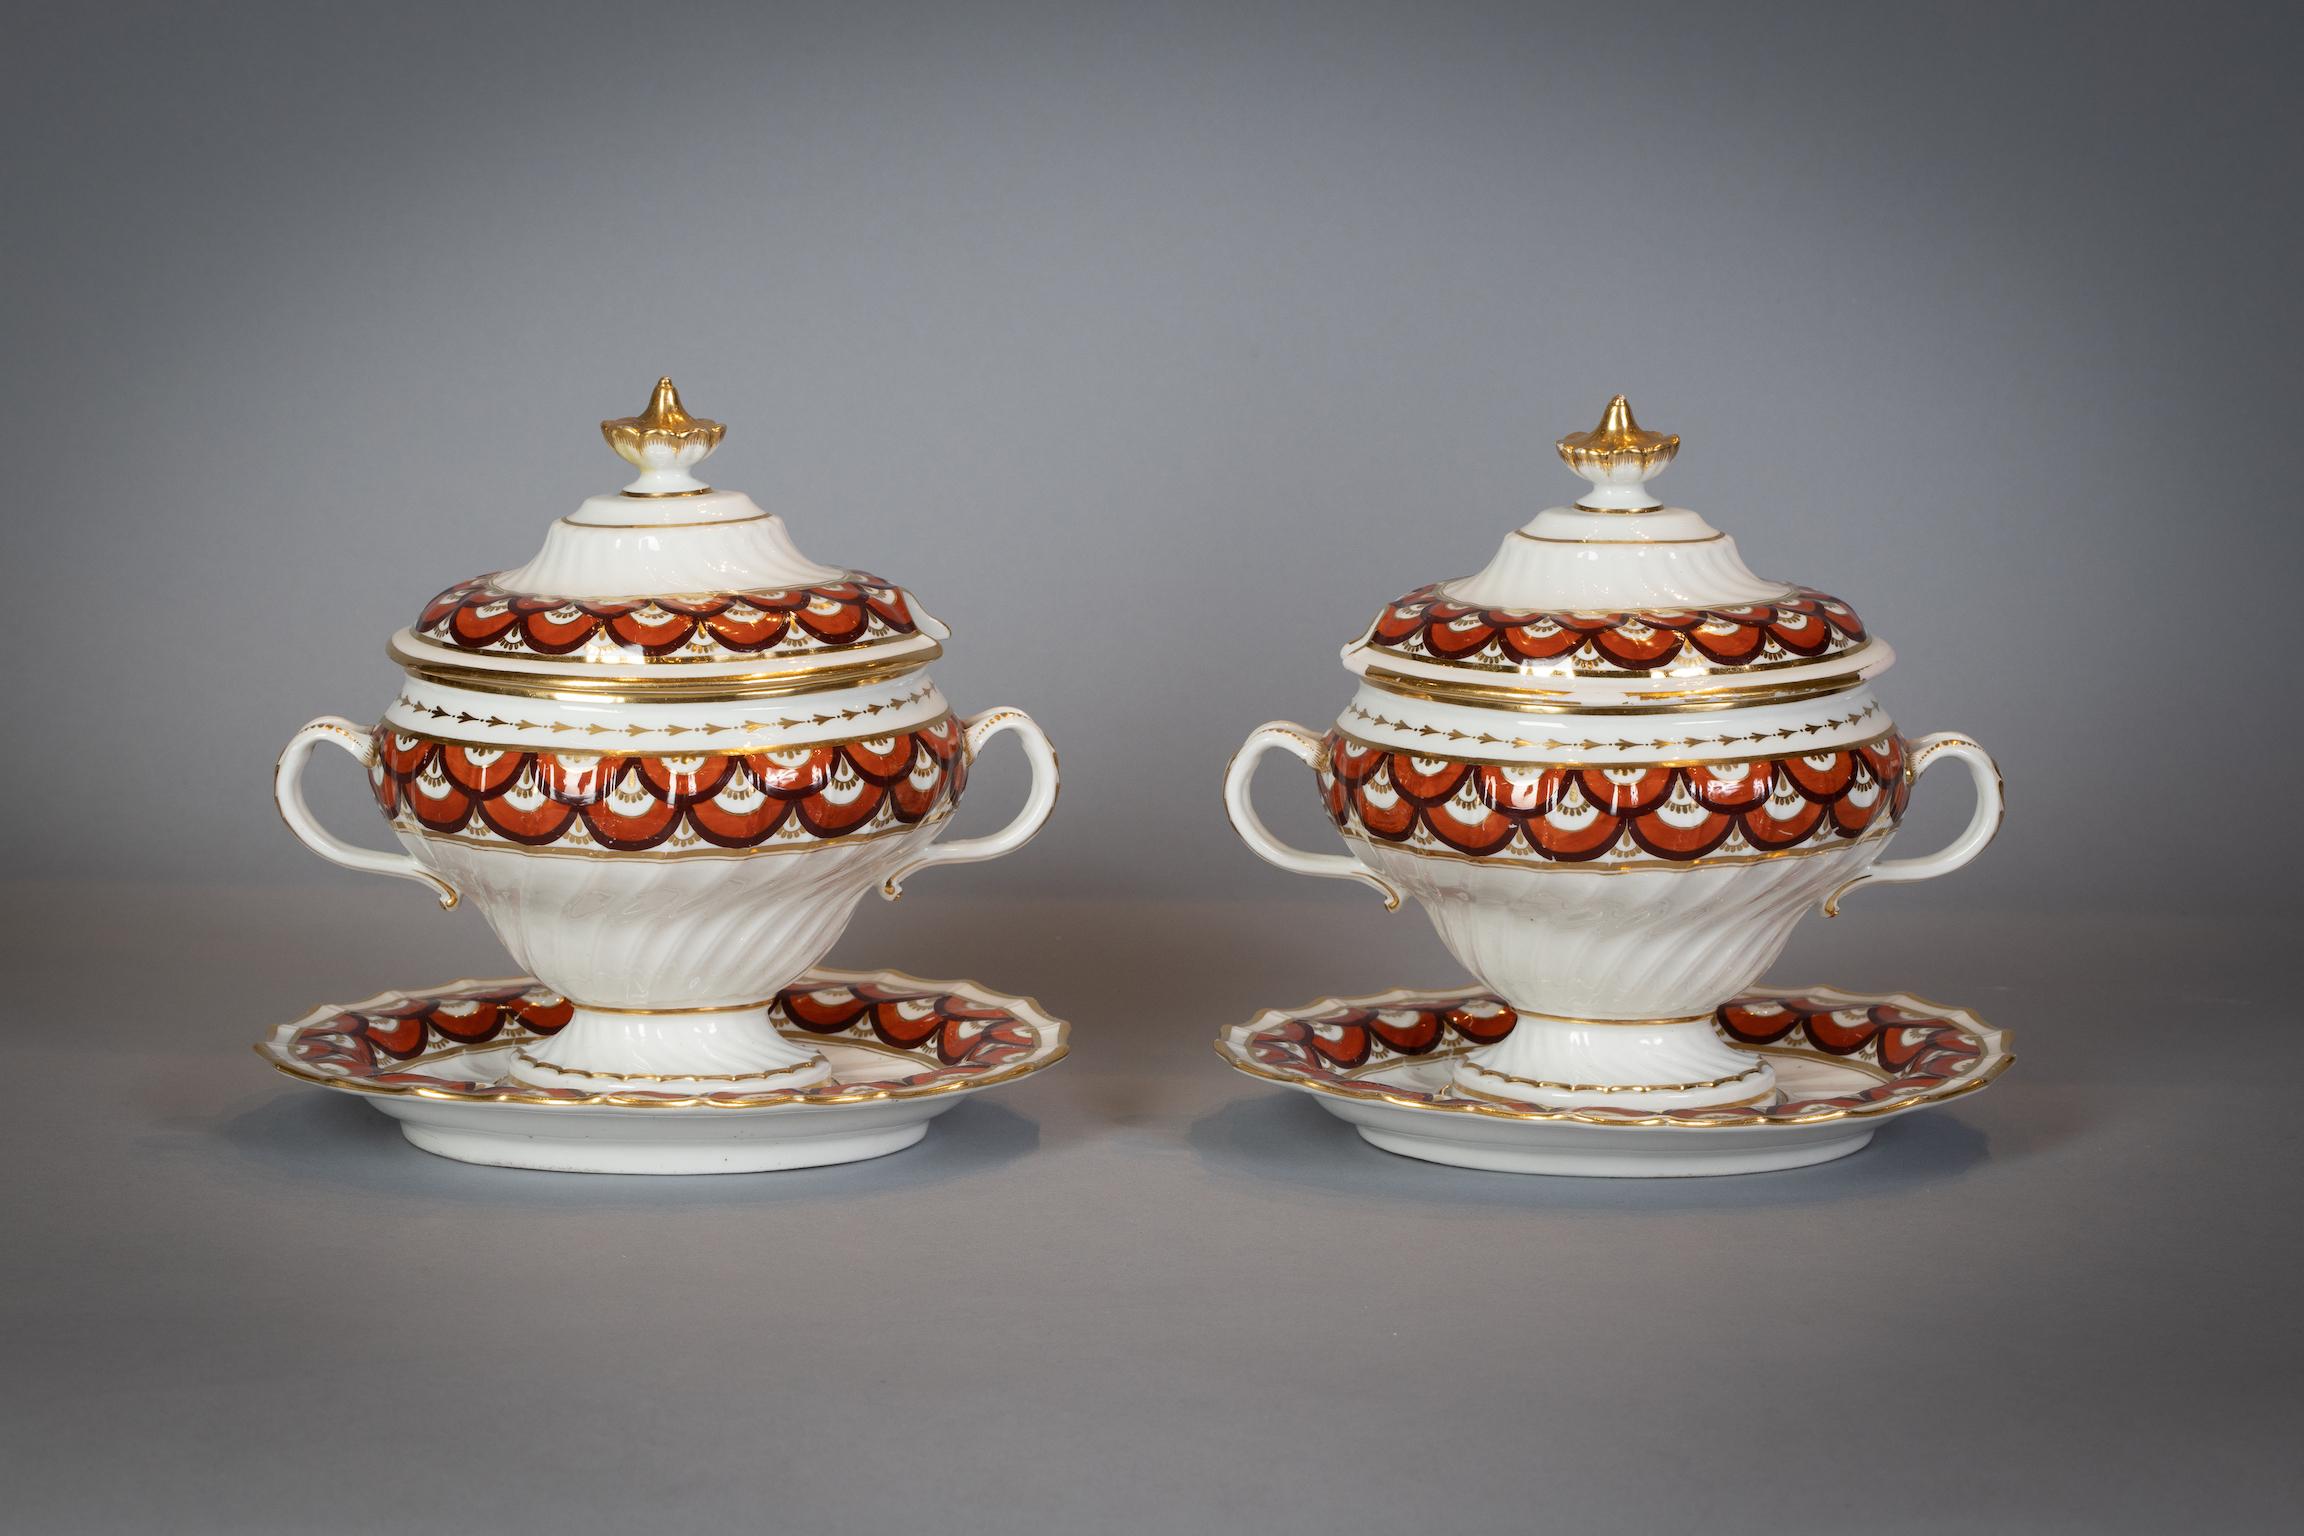 Extensive English Porcelain Dessert Service, Flight and Barr, circa 1792 For Sale 2